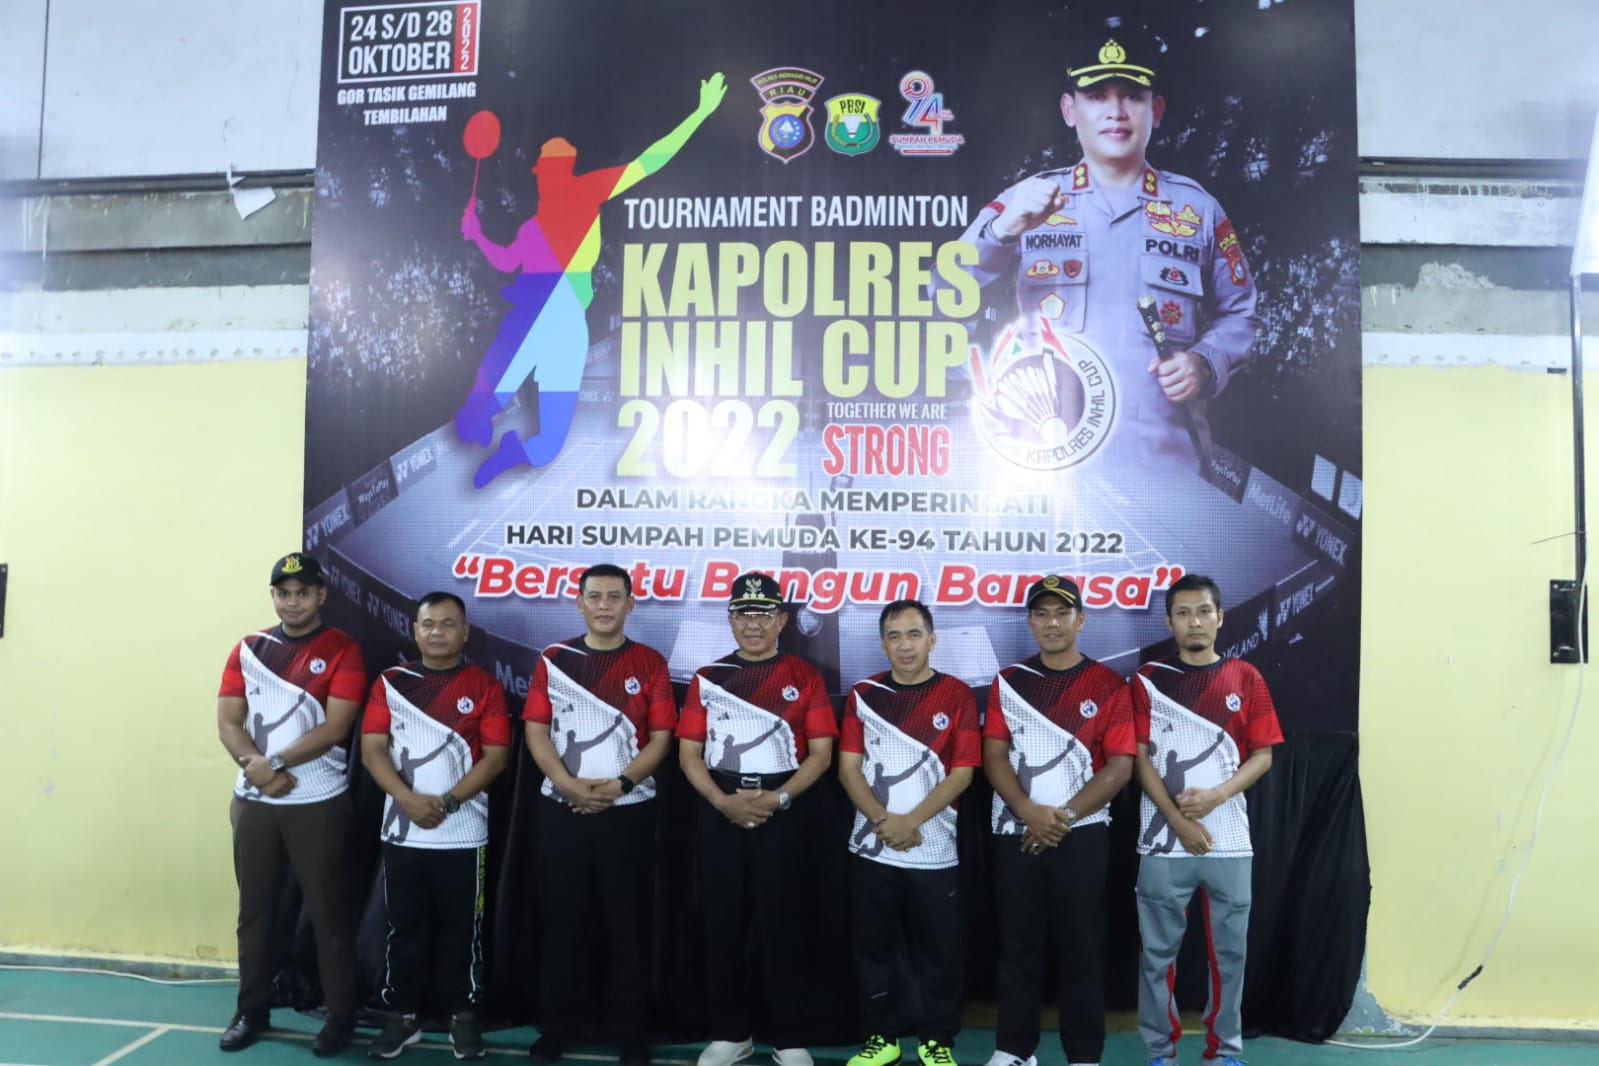 Turnamen Badminton Kapplrrs Inhil Vup Resmi Digelar